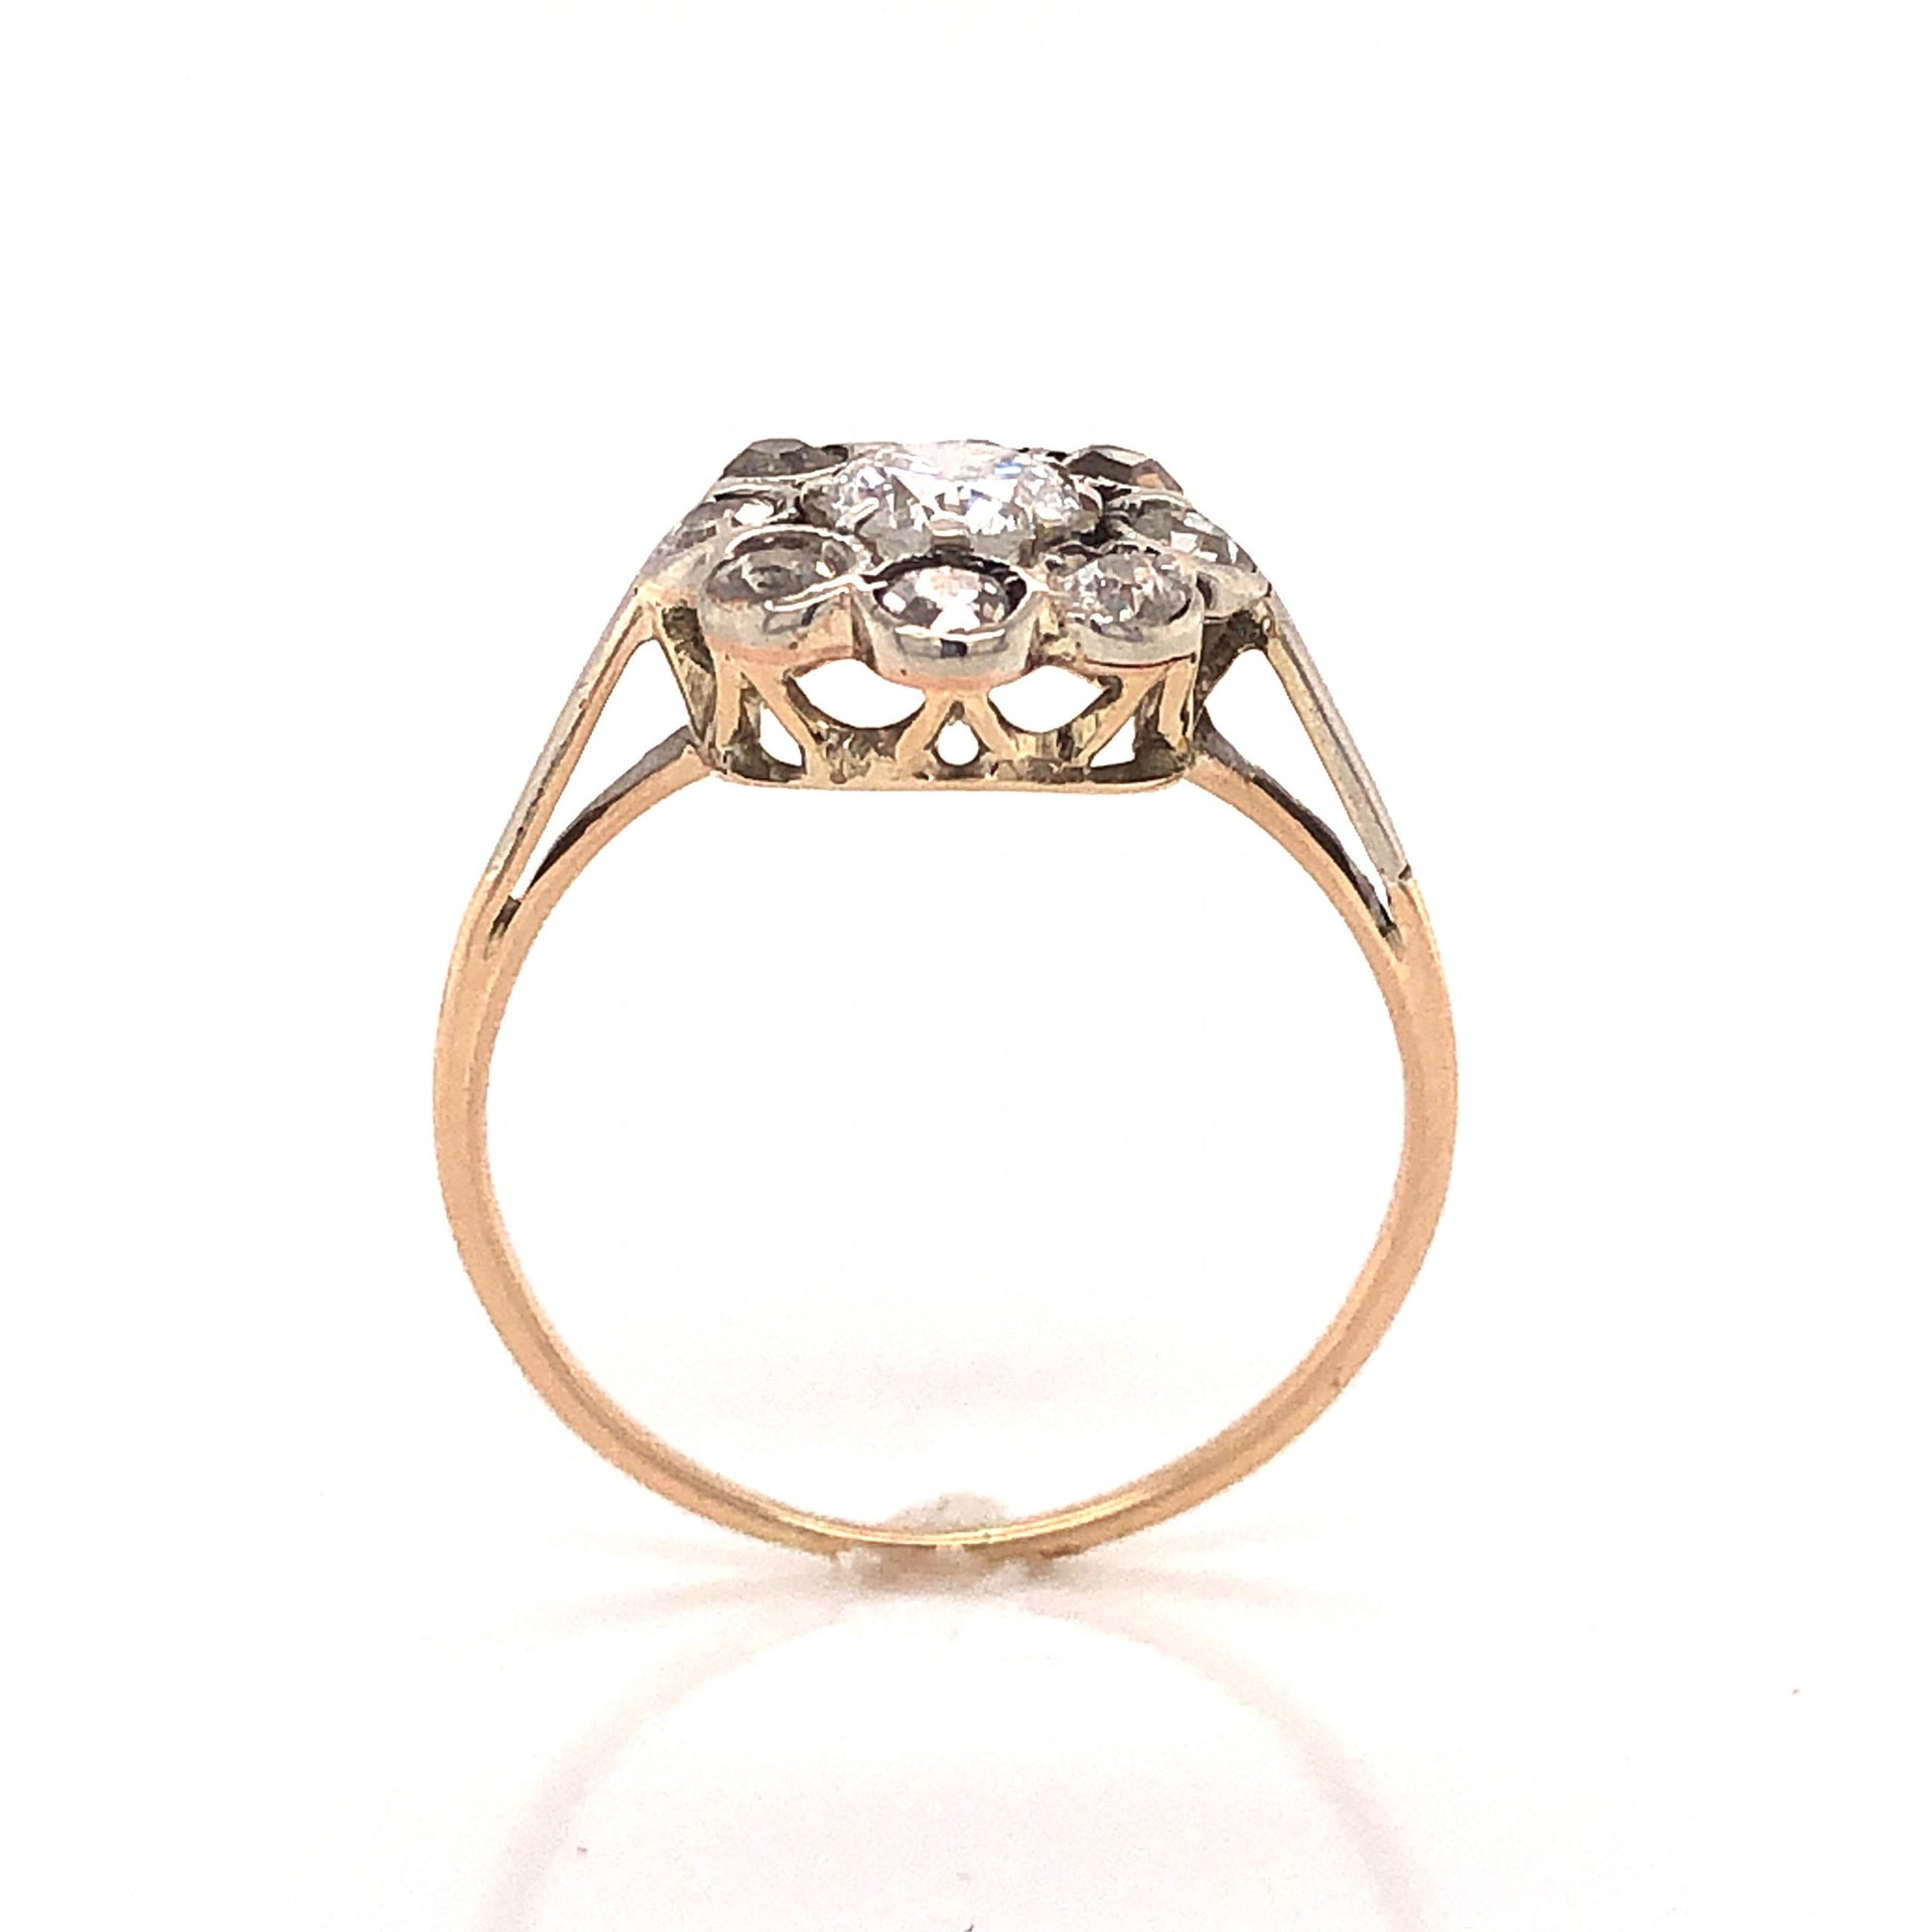 Victorian Bezel Set Diamond Cluster Engagement Ring in Silver & 14k